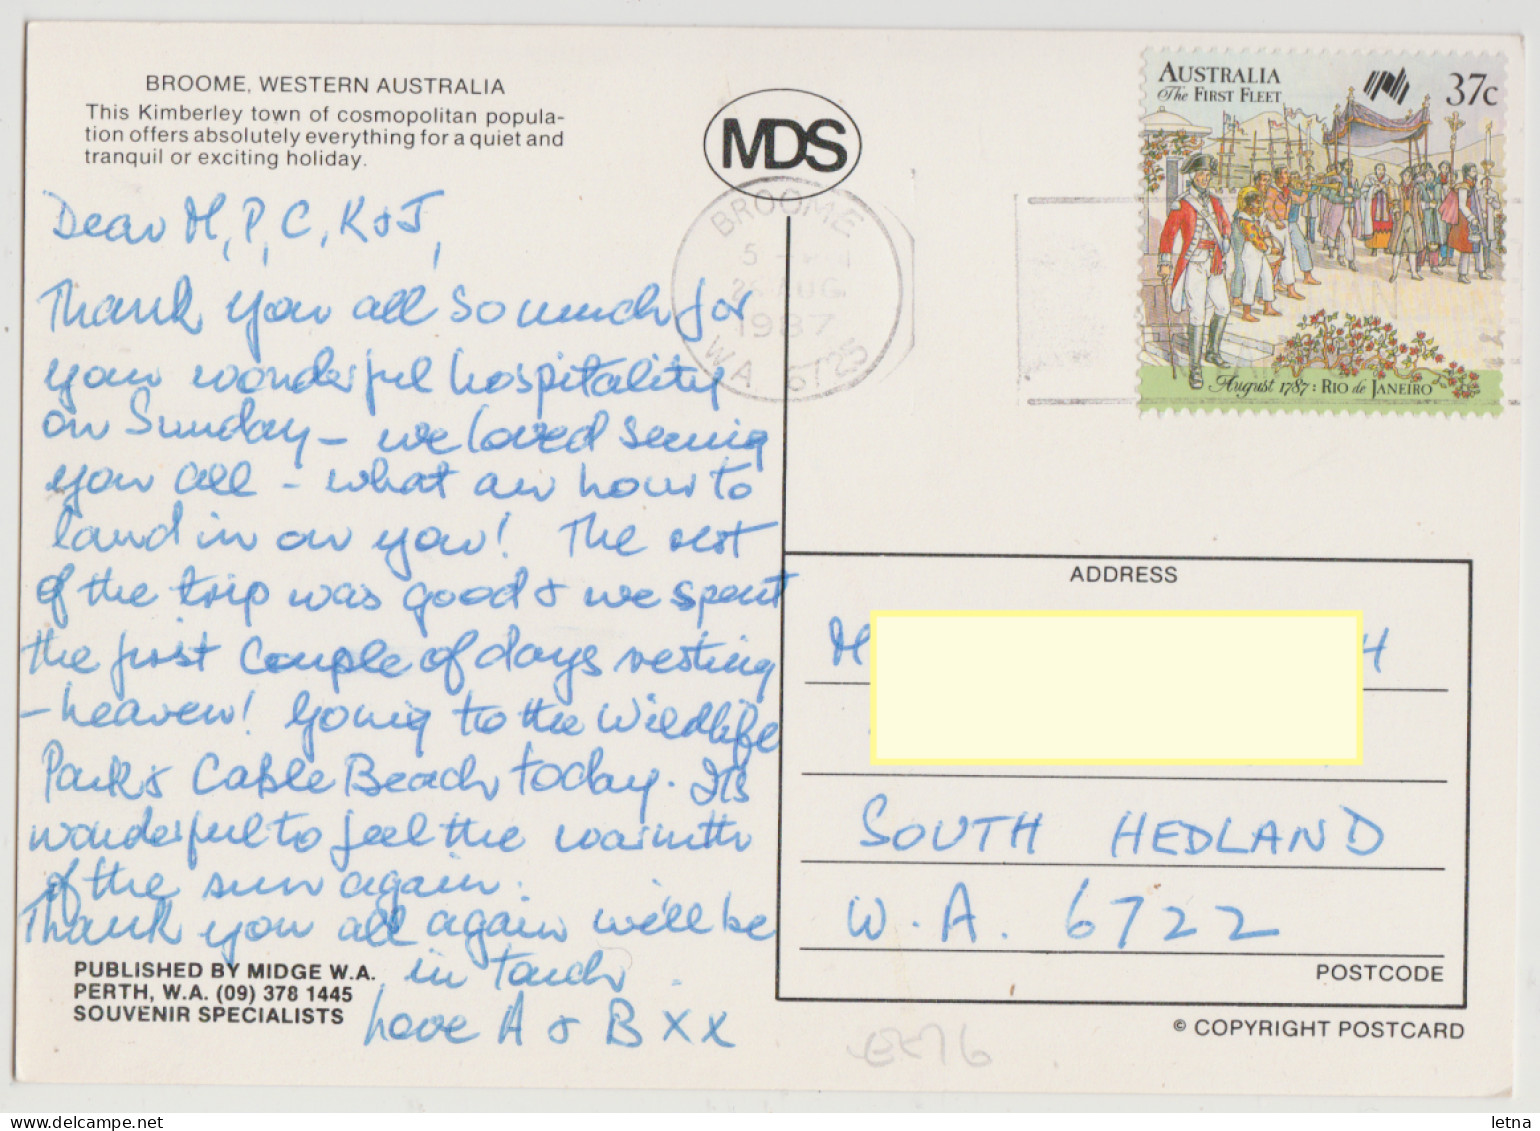 WESTERN AUSTRALIA WA Town Coast & Pearling Industry Views BROOME Midge MDS Postcard 1987BROOME Pmk 37c Stamp - Broome